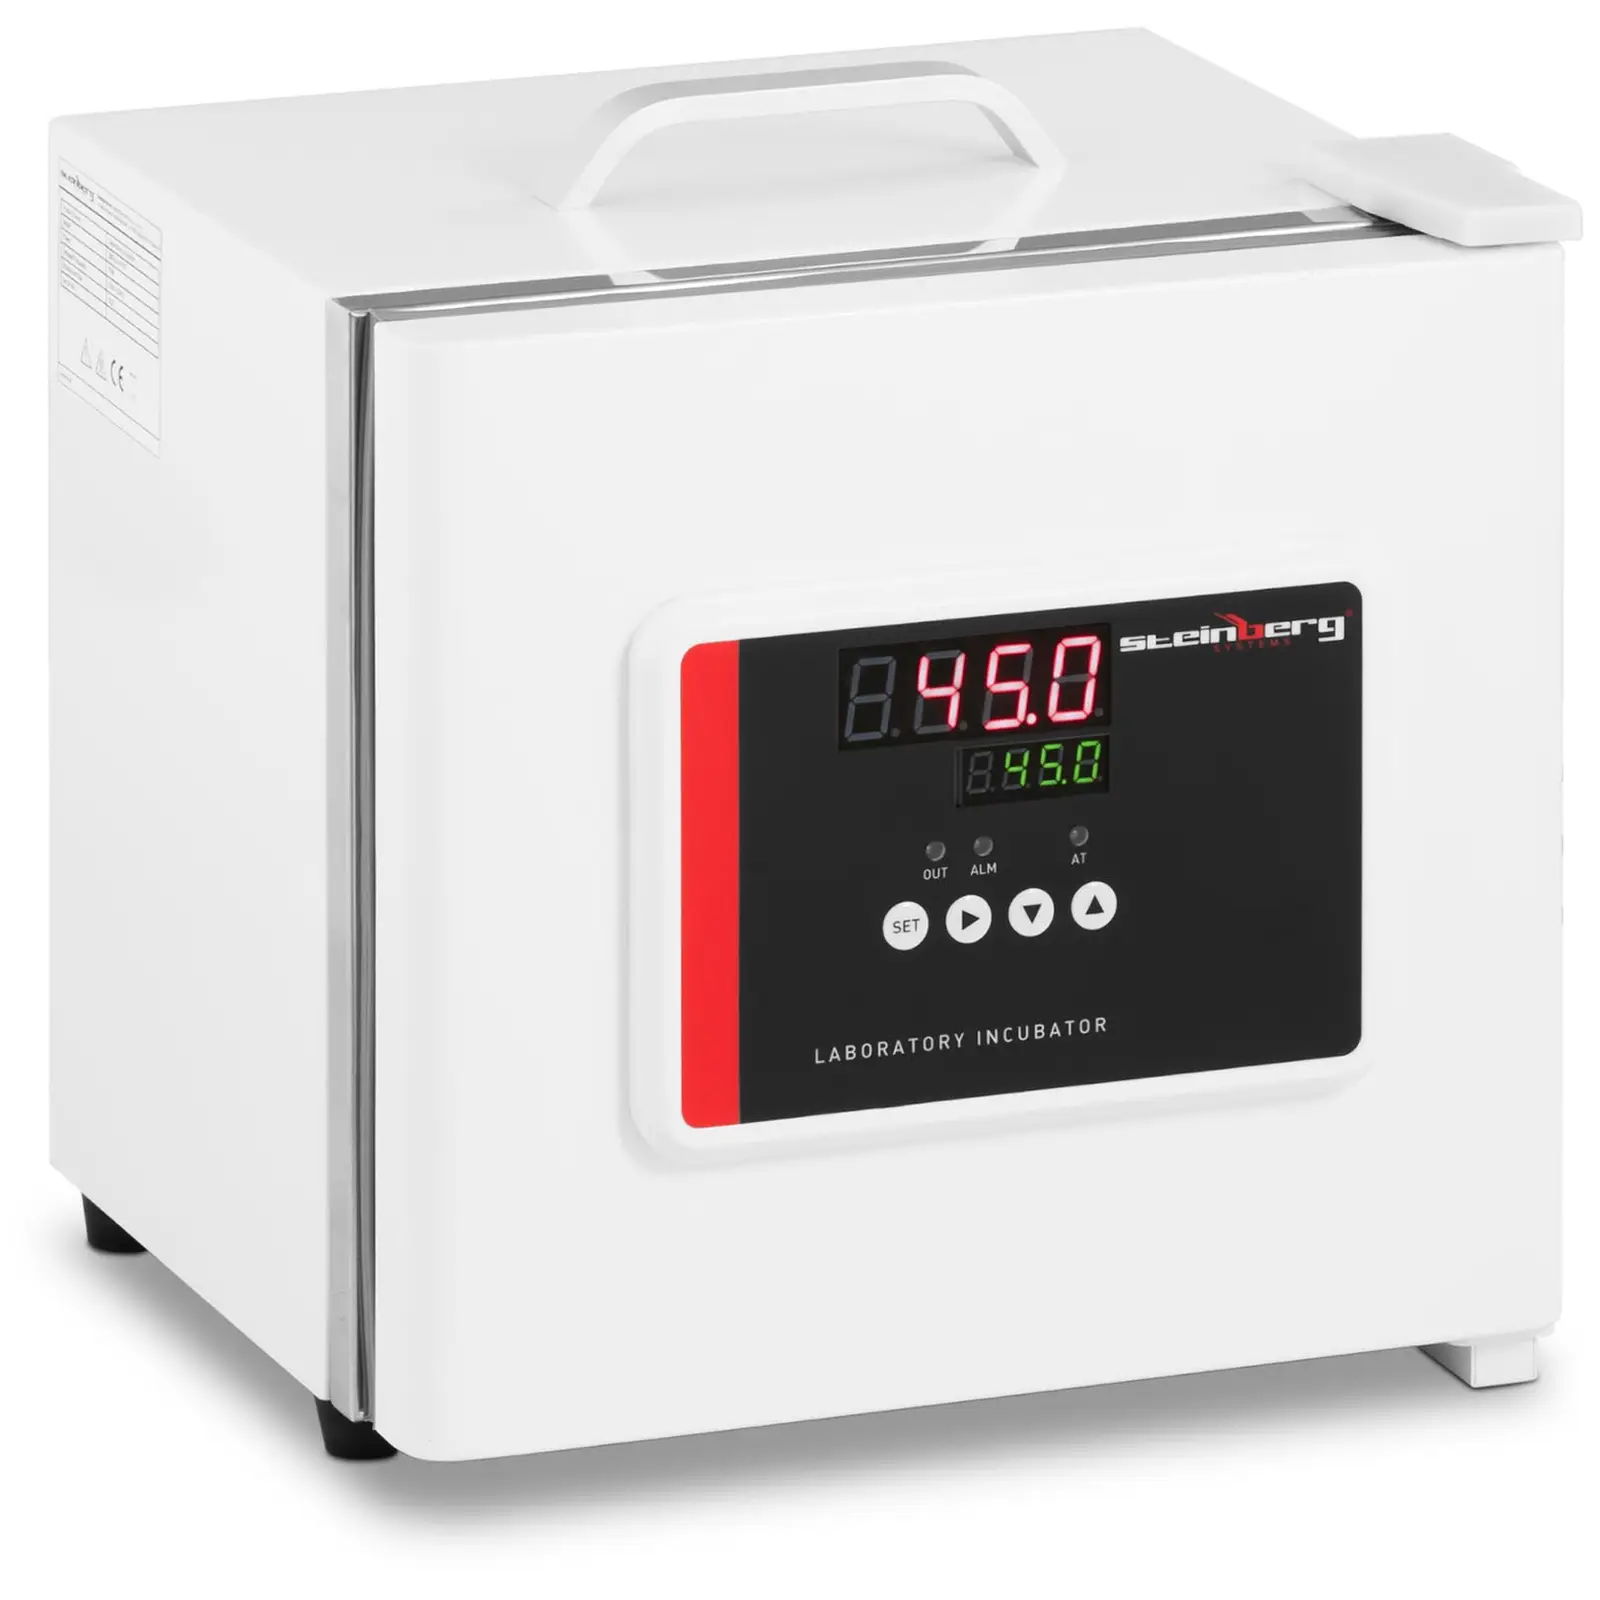 Laboratory Incubator - up to 45 °C - 7.5 L